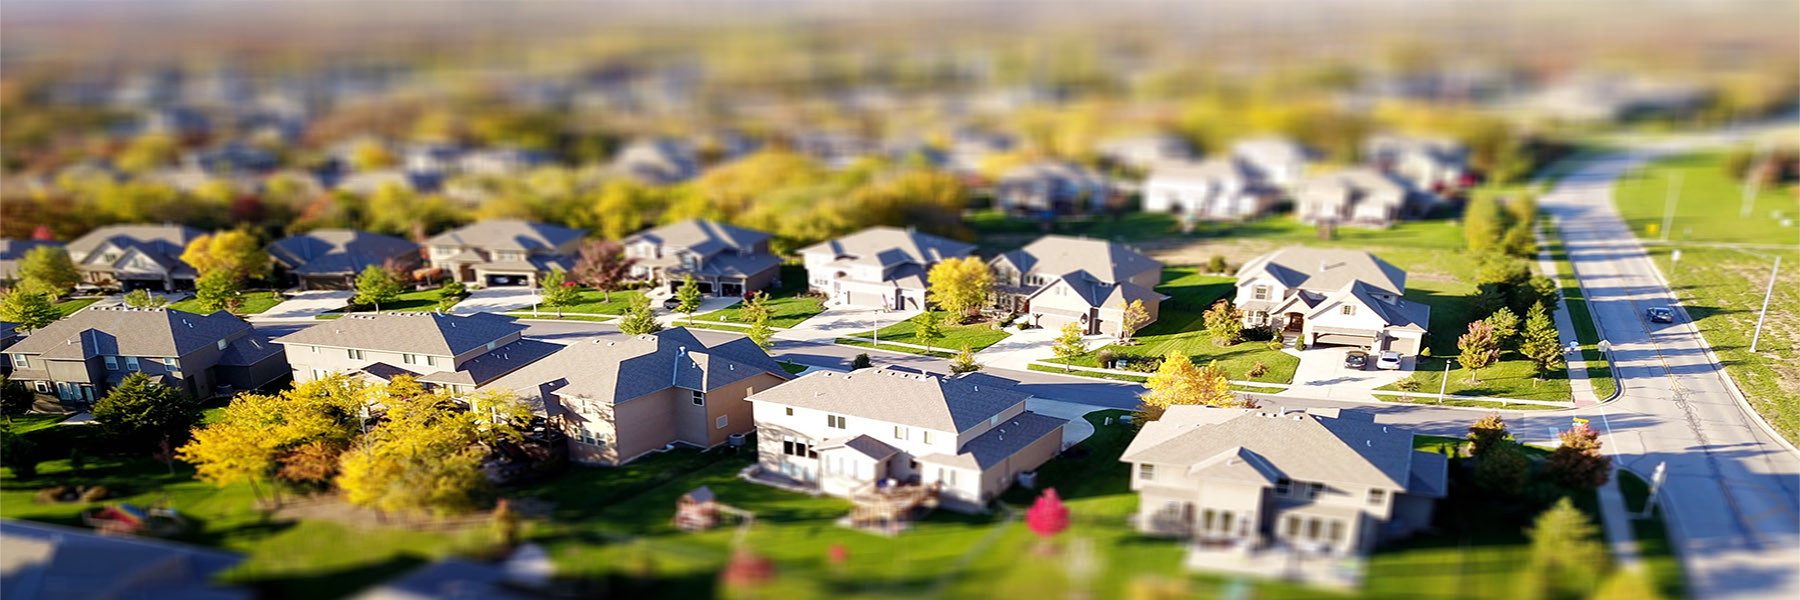 rows of suburban houses